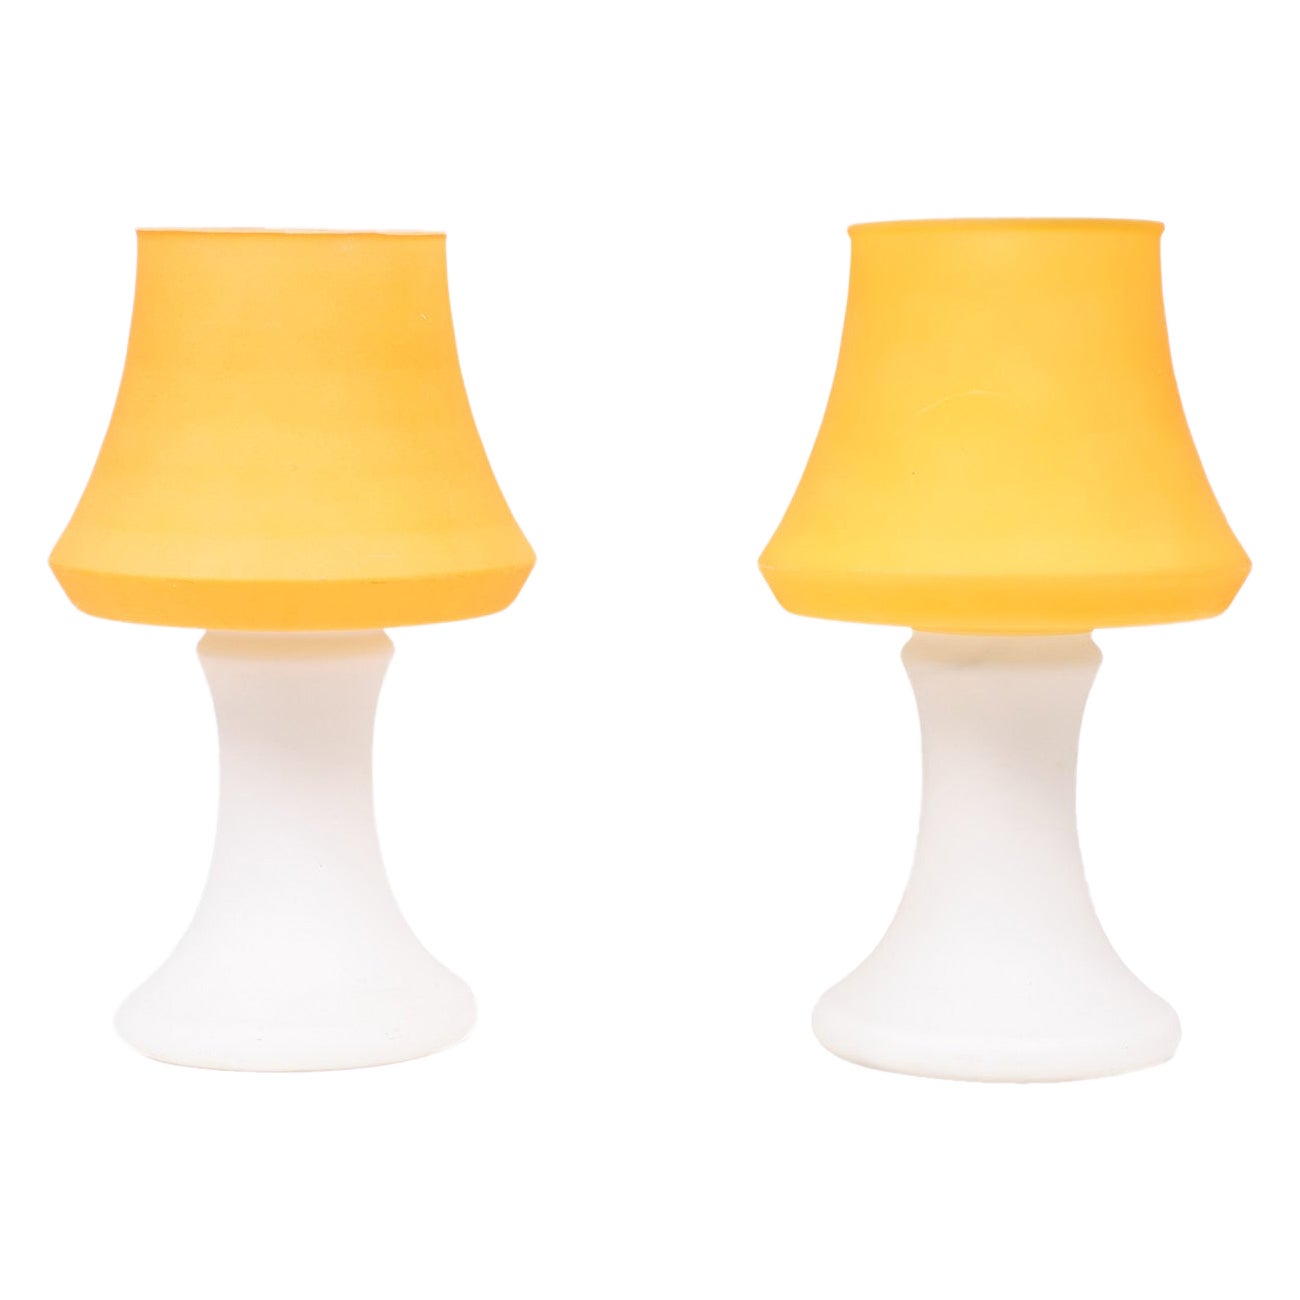 Murano Glass Table Lamps Brilliant Leuchten, 1970s For Sale